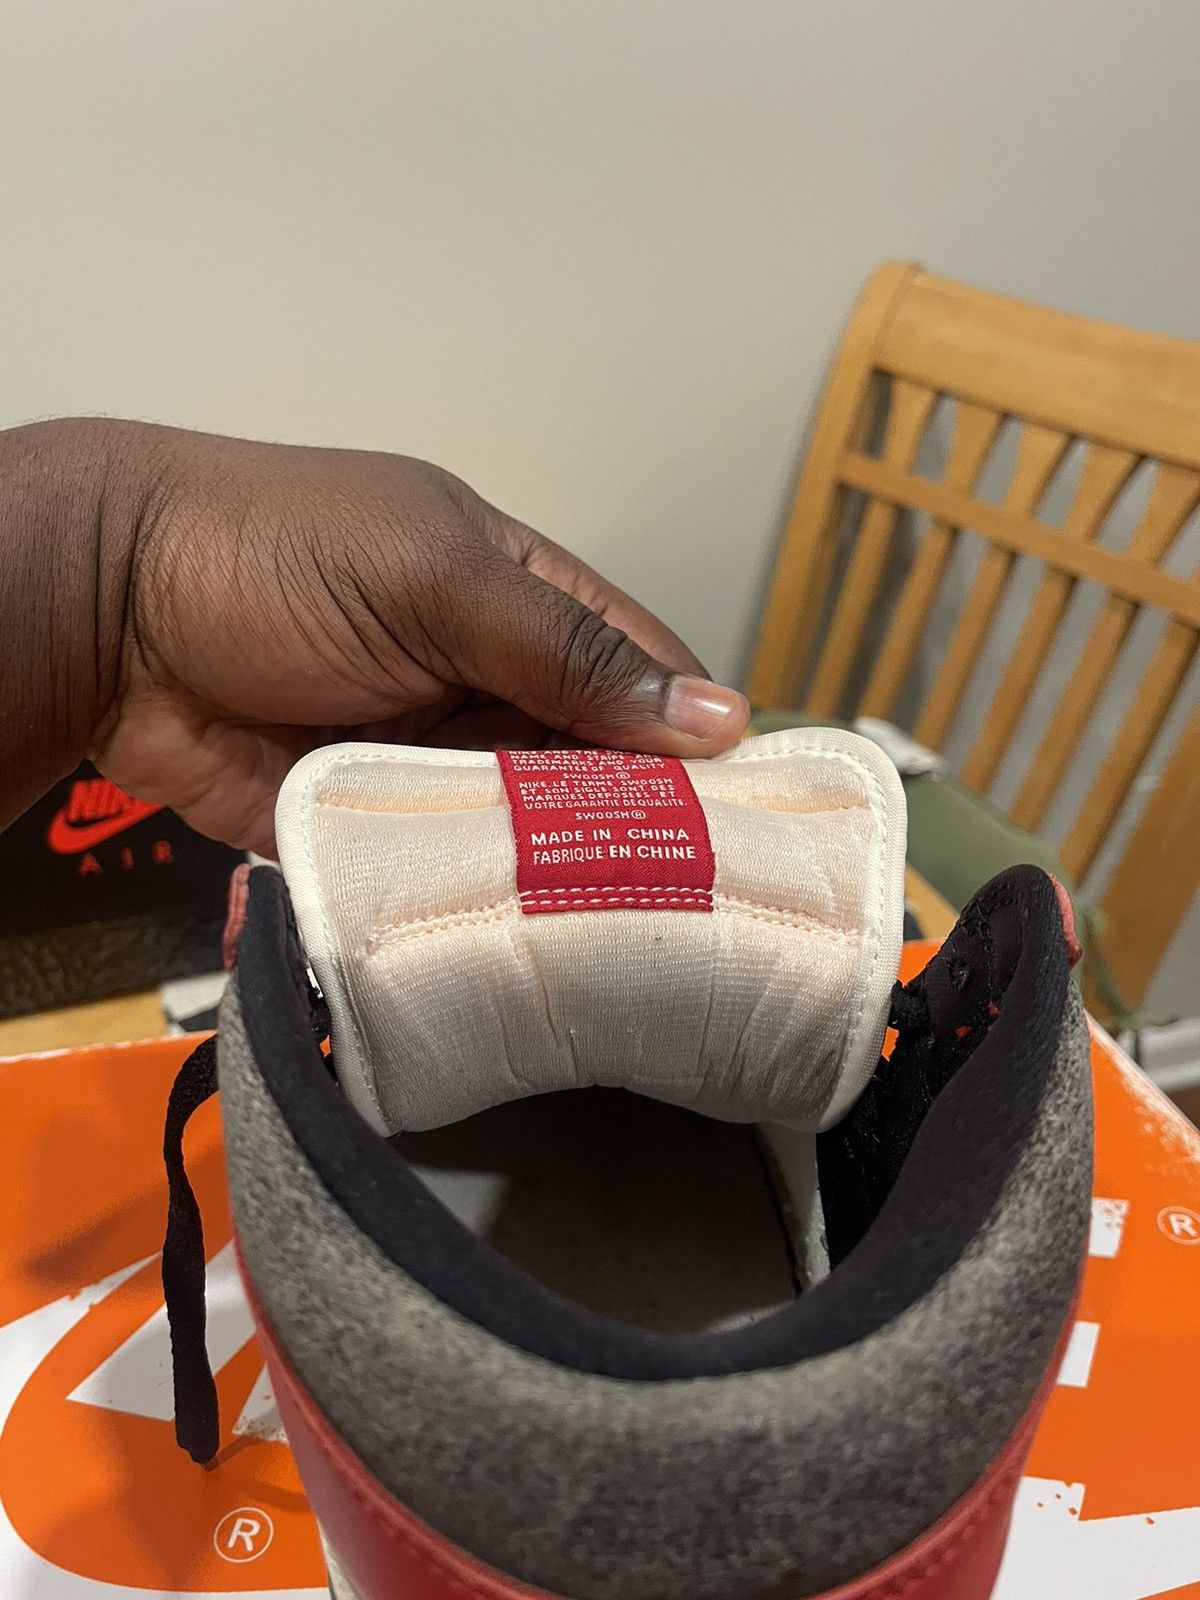 Nike Air Jordan 1 - Chicago “Lost & Found” Size US 10.5 / EU 43-44 - 11 Thumbnail